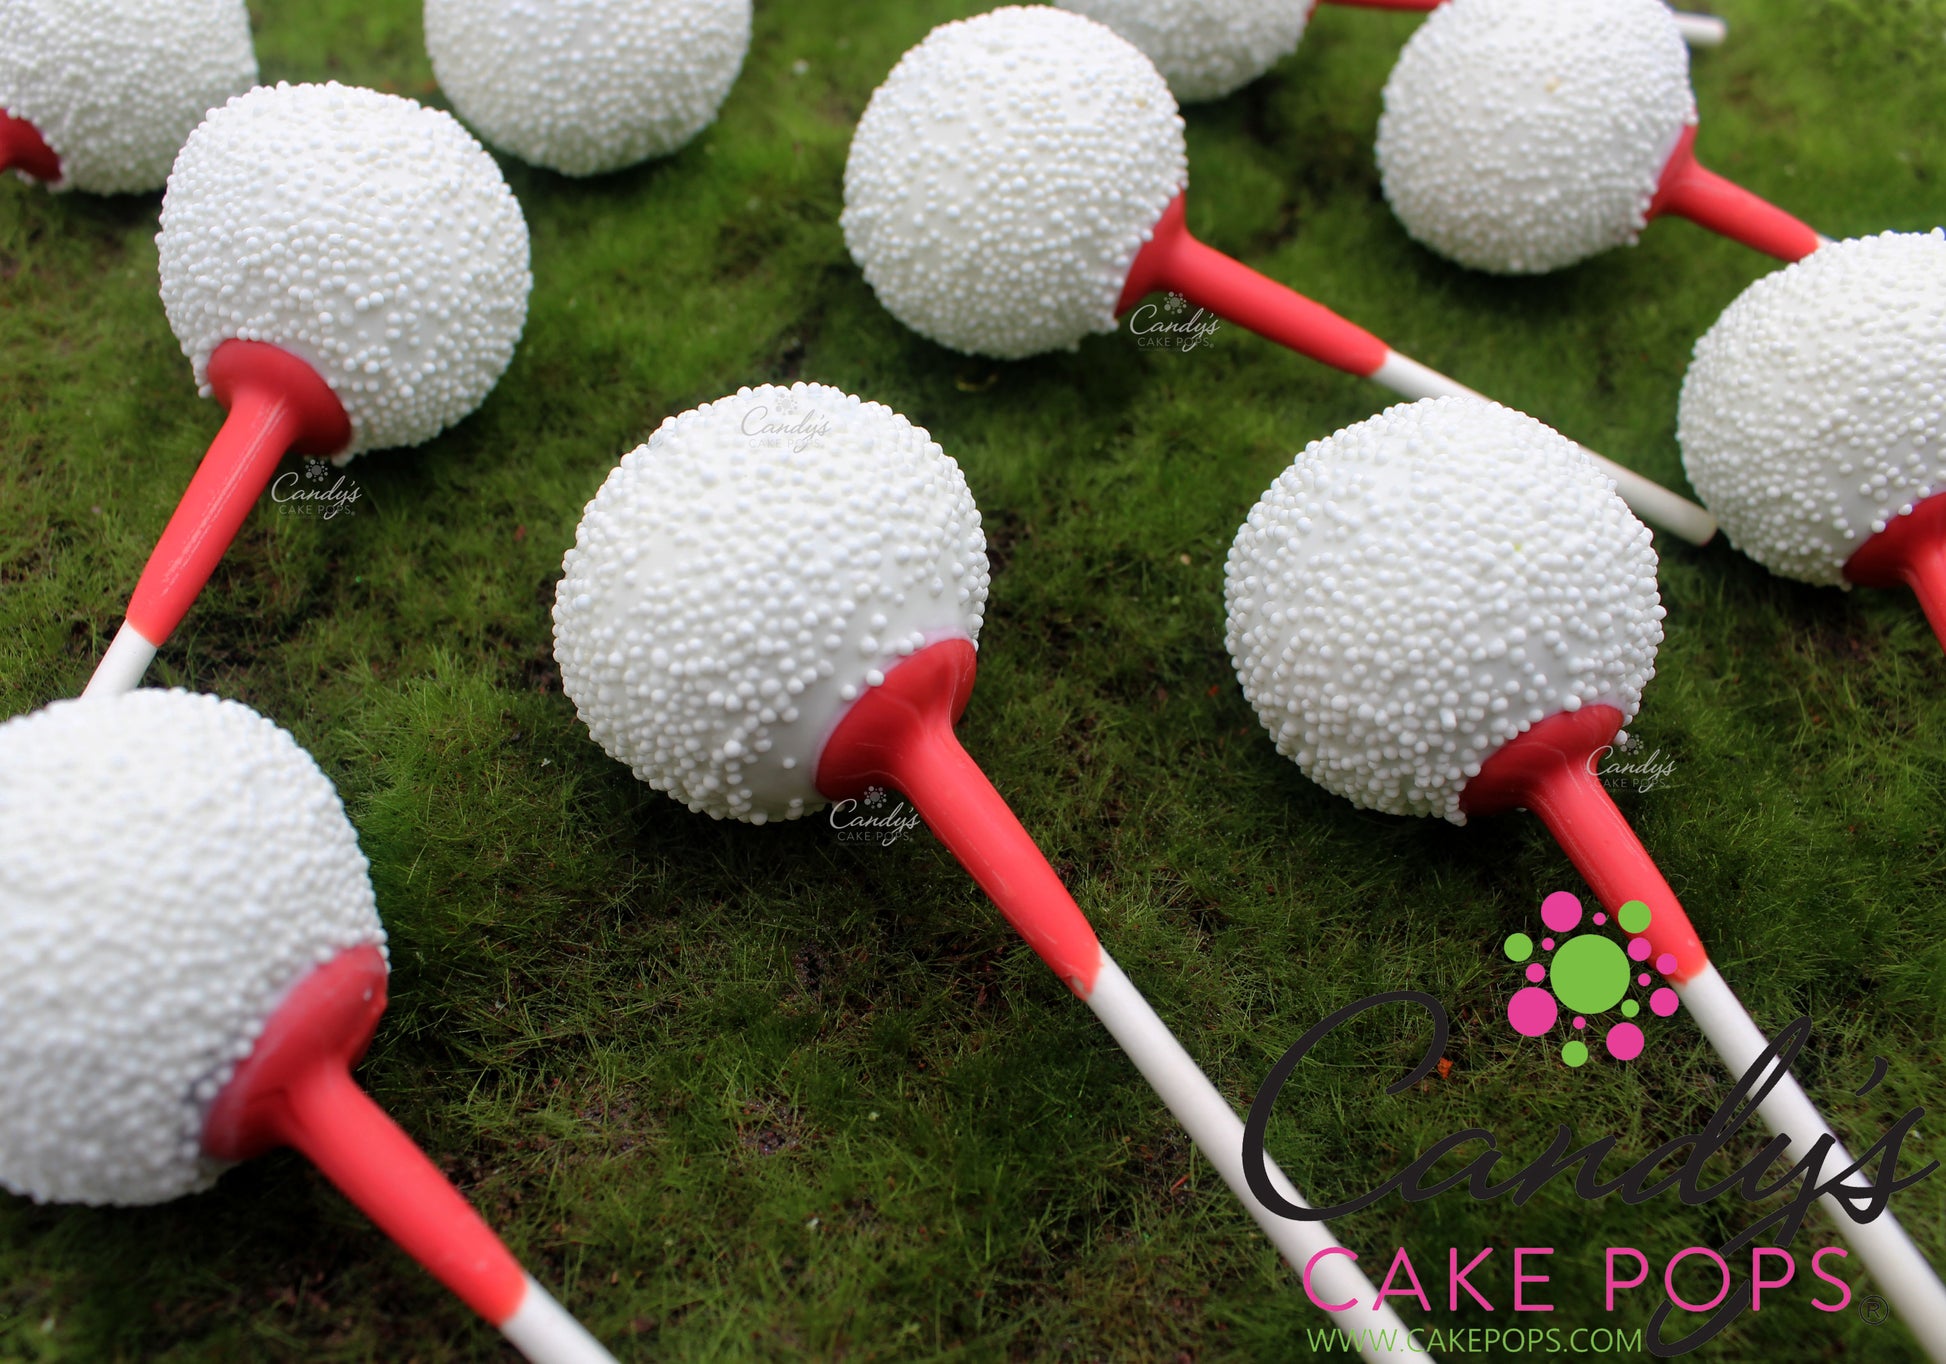 Golf Ball Cake Pops - Candy's Cake Pops